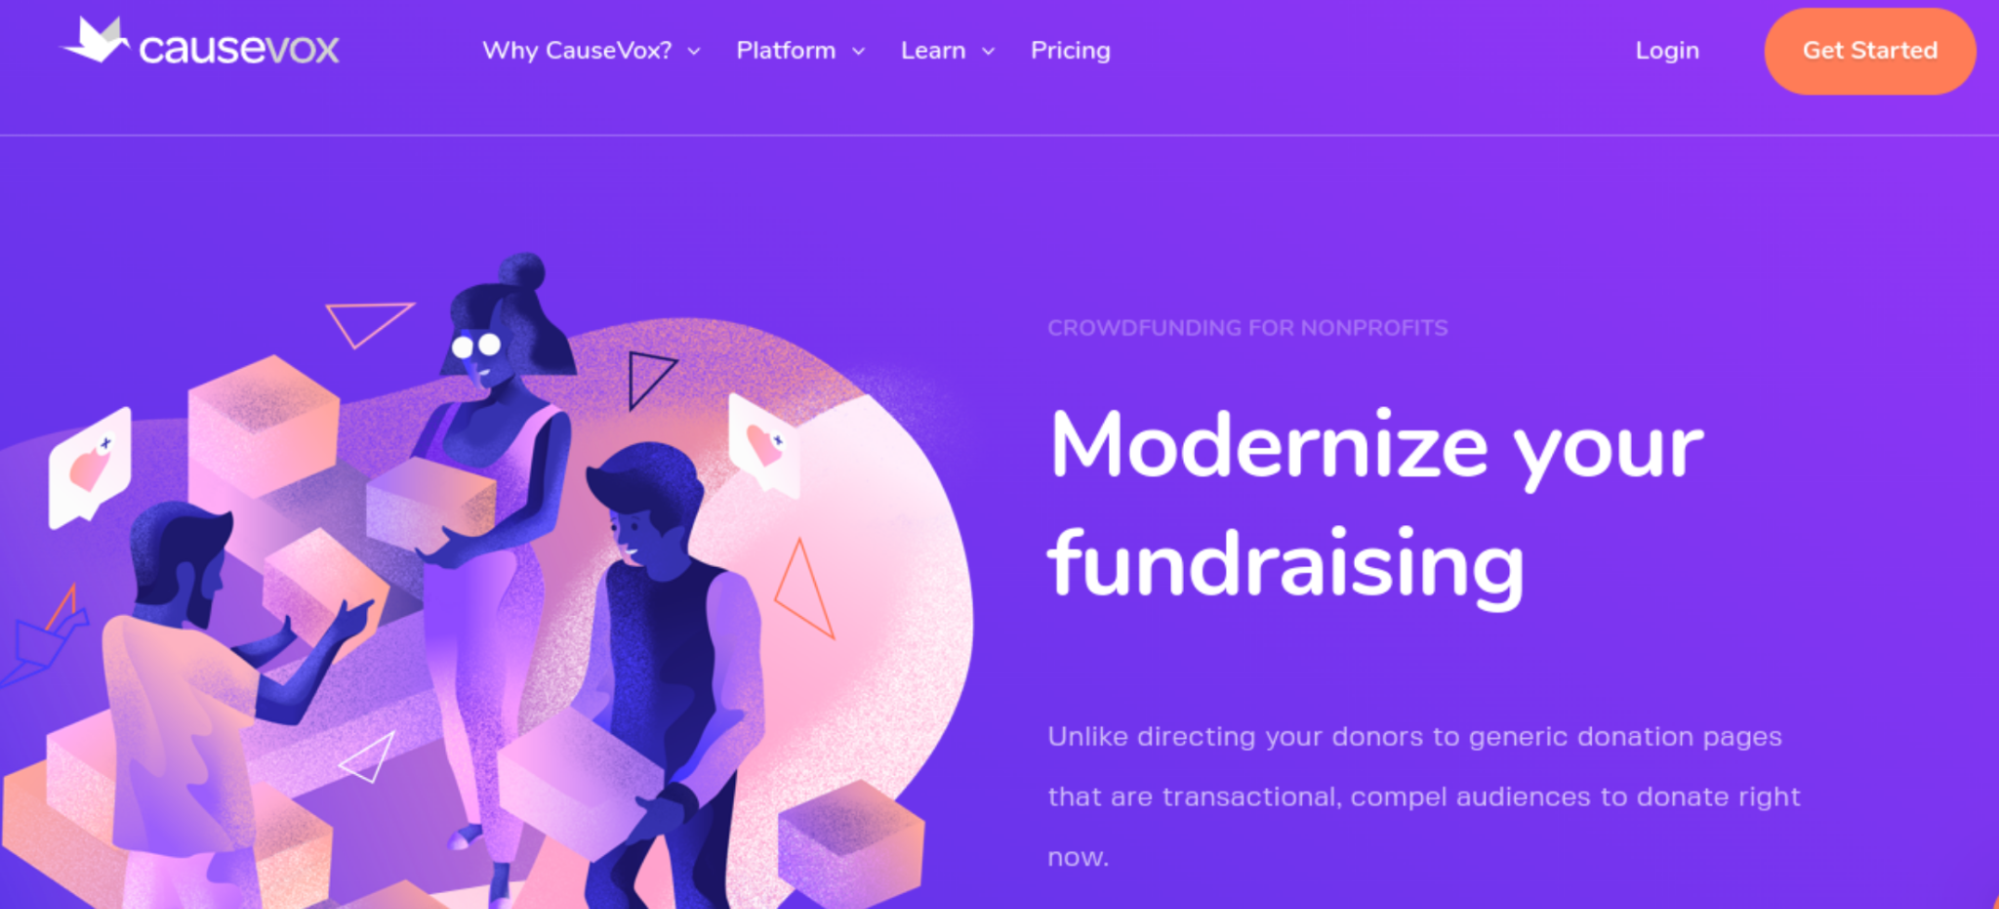 CauseVox Crowdfunding site for nonprofits